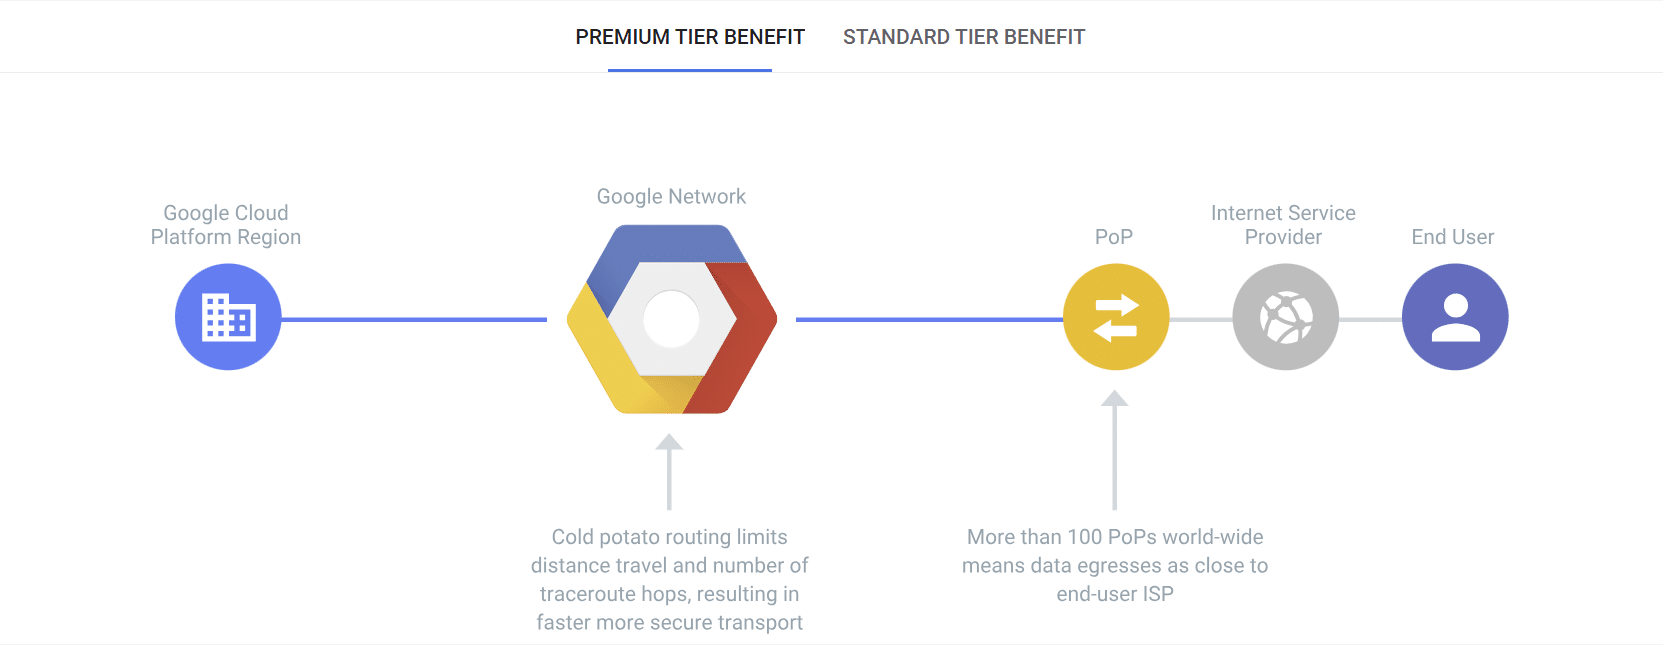 GCP's Premium Tier benefit